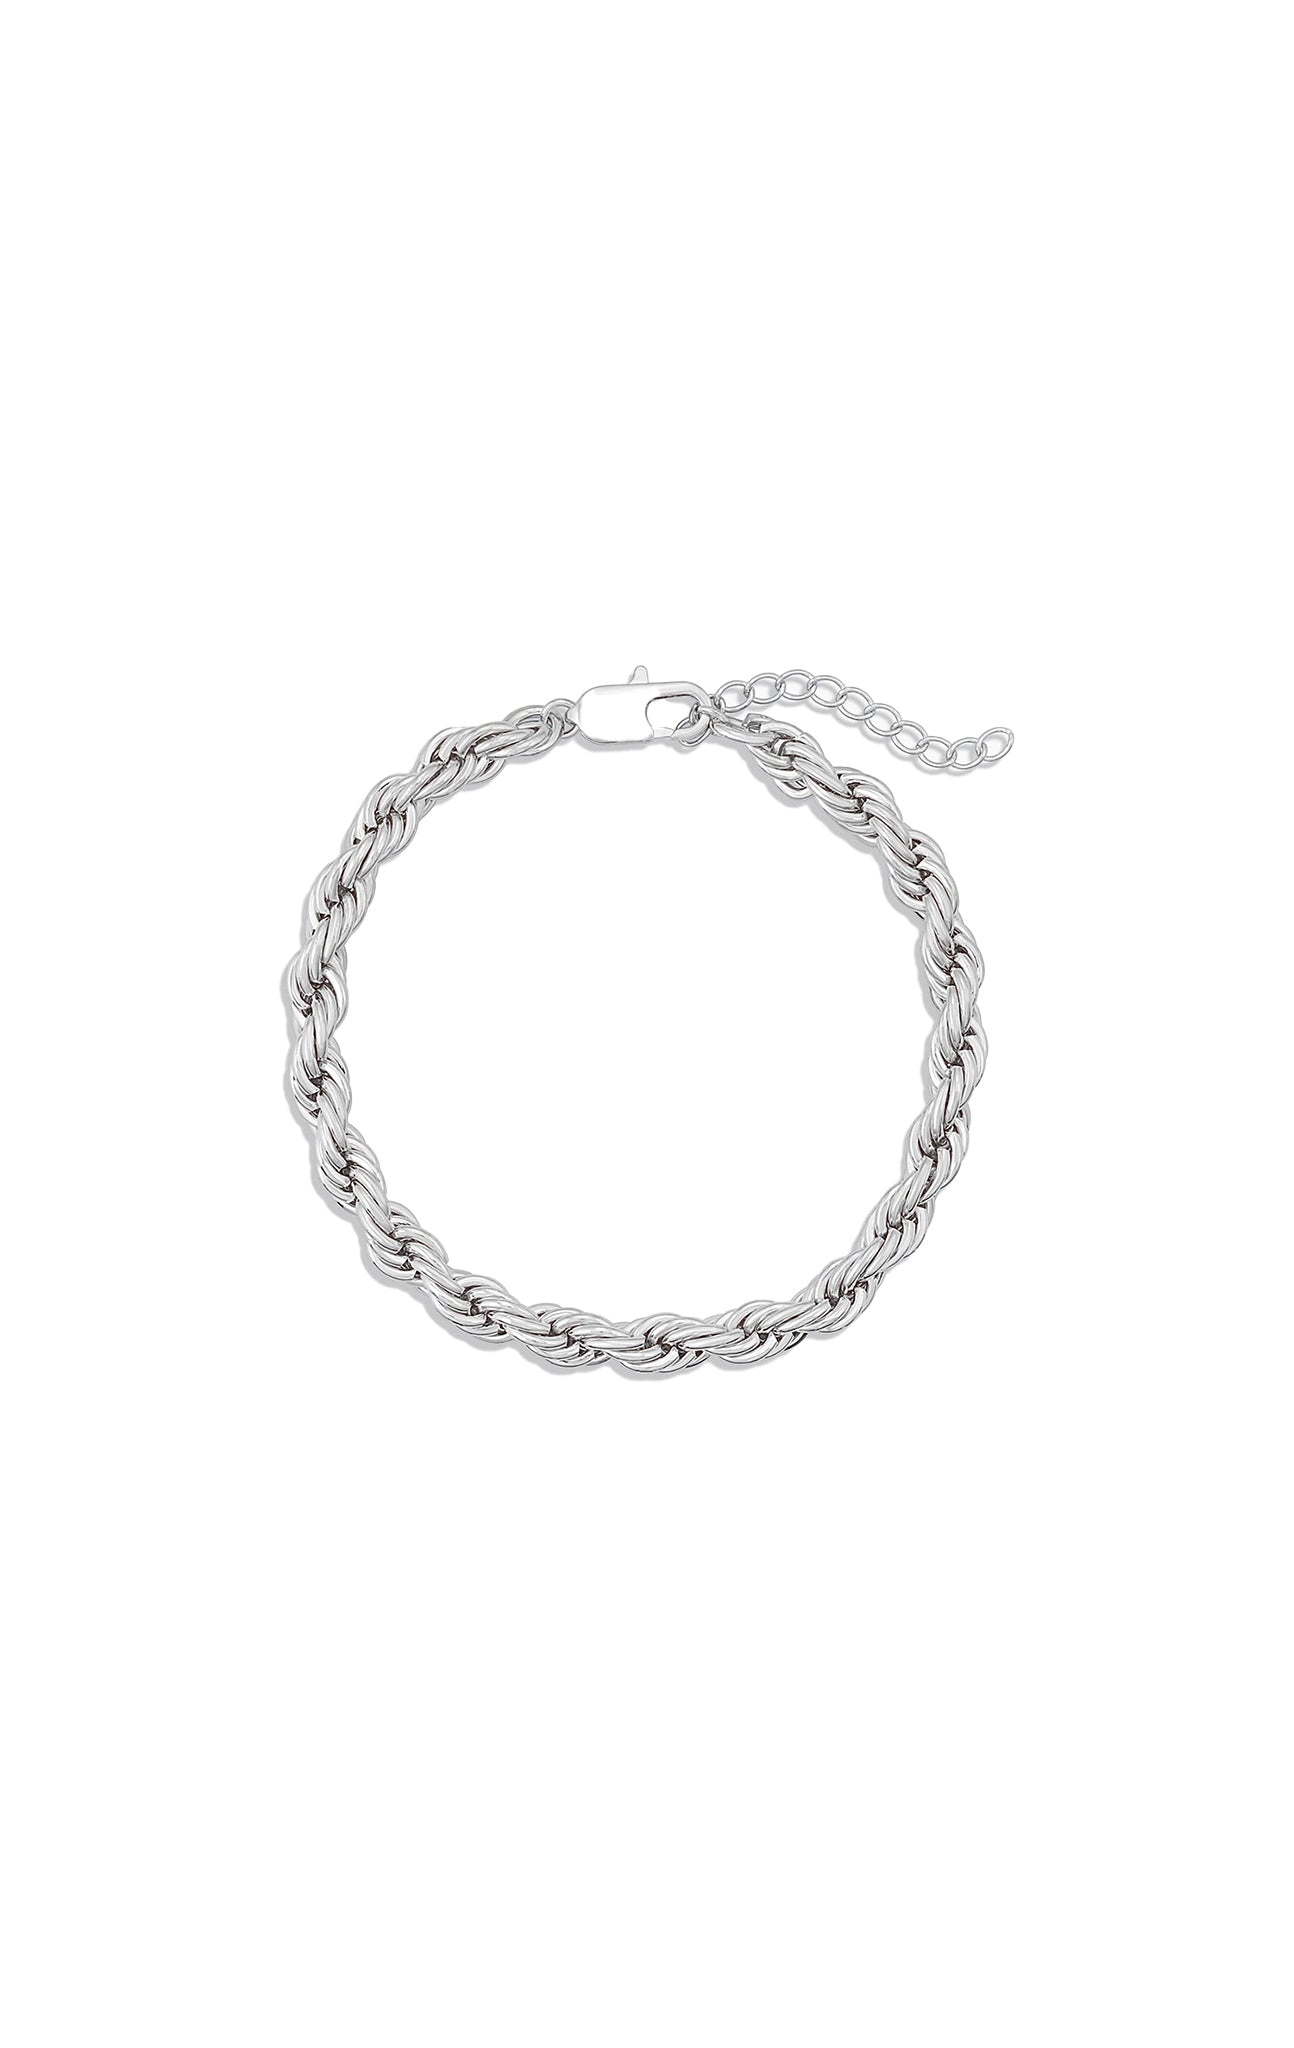 THATCH - Bowie Rope Bracelet / Anklet